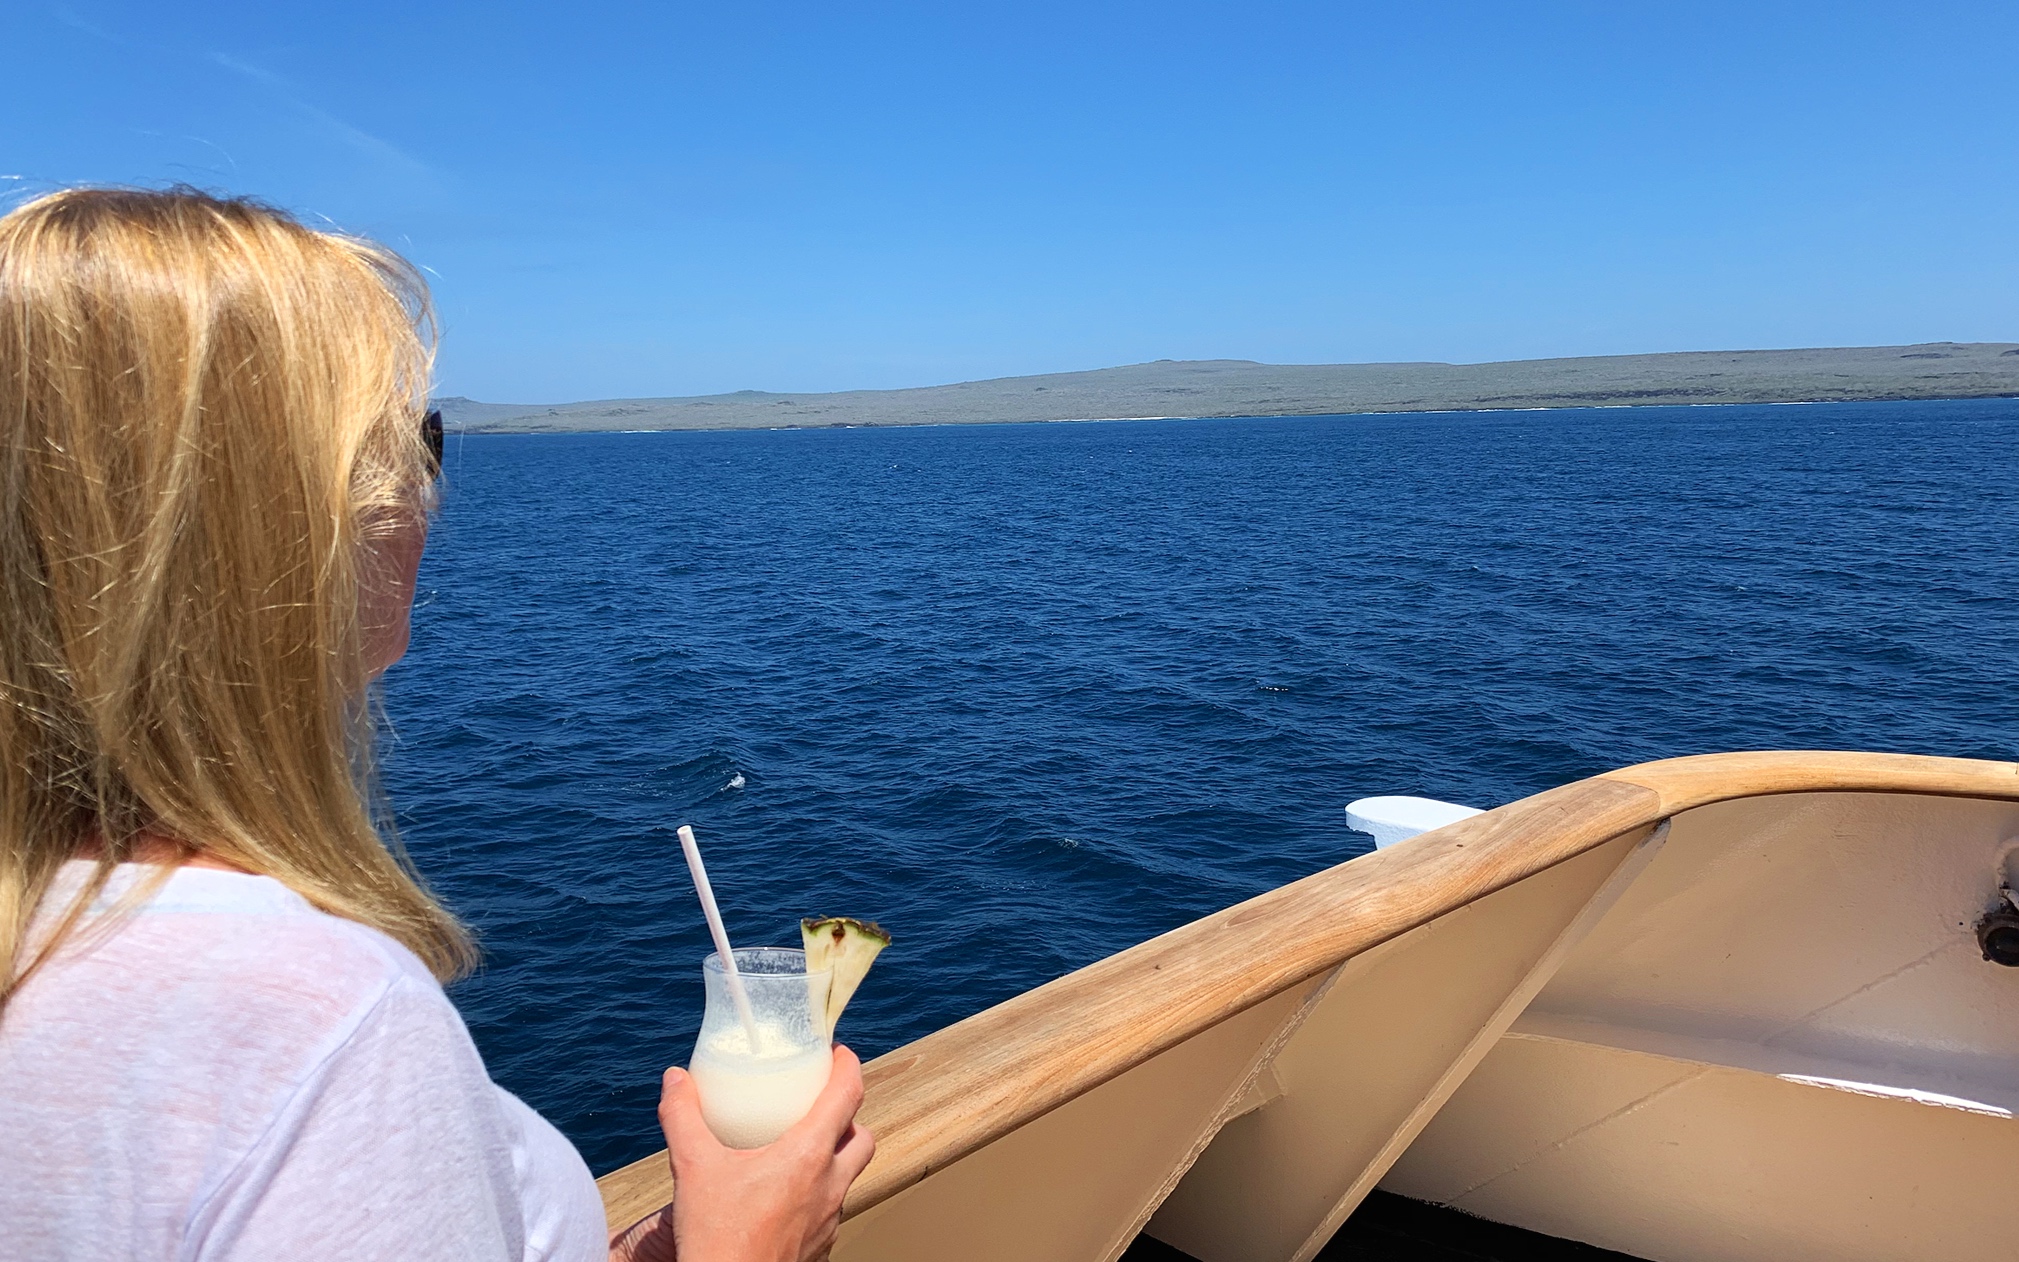  Enjoying a cocktail during sailaway.  